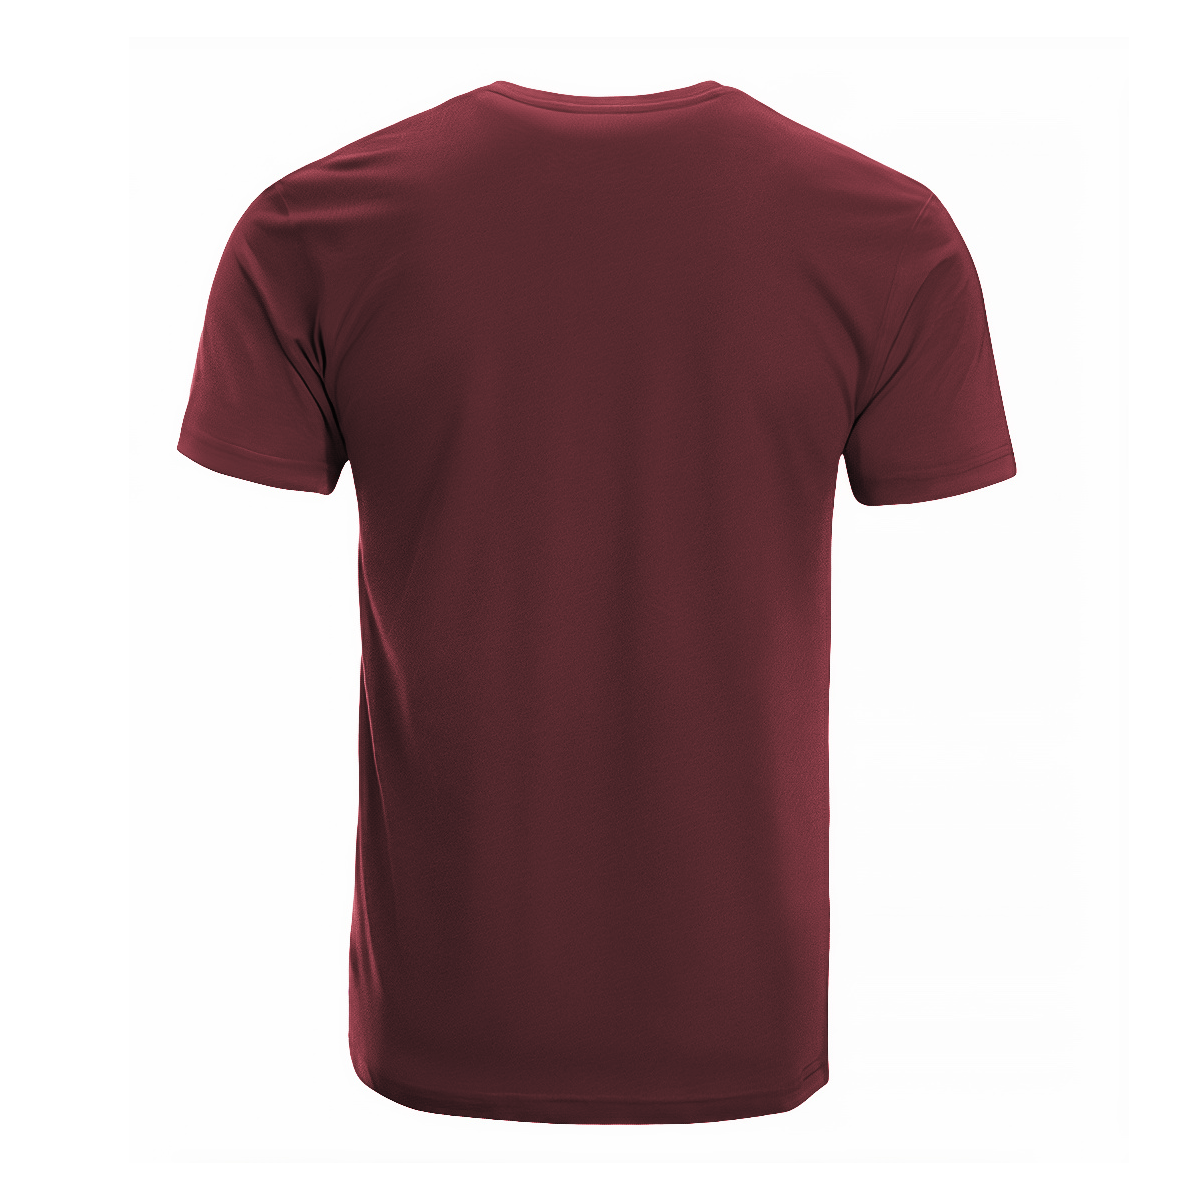 Somerville Tartan Crest T-shirt - I'm not yelling style